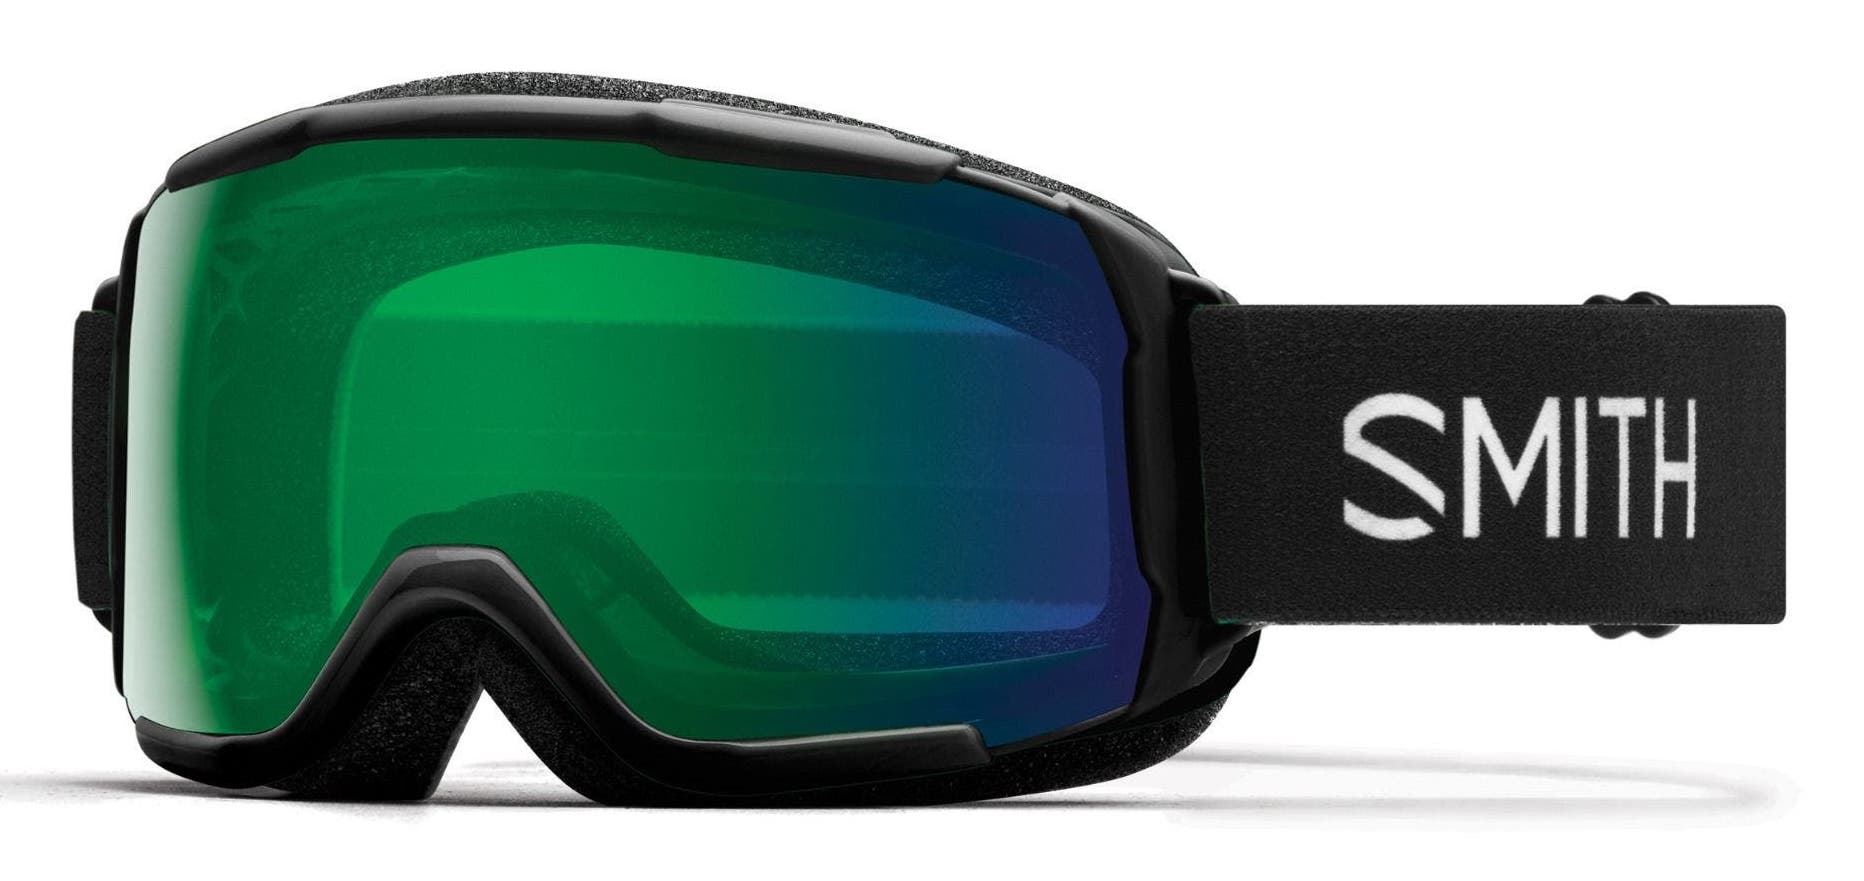 SMITH Grom kids ski snow goggles in black with green chromapop shield lens.